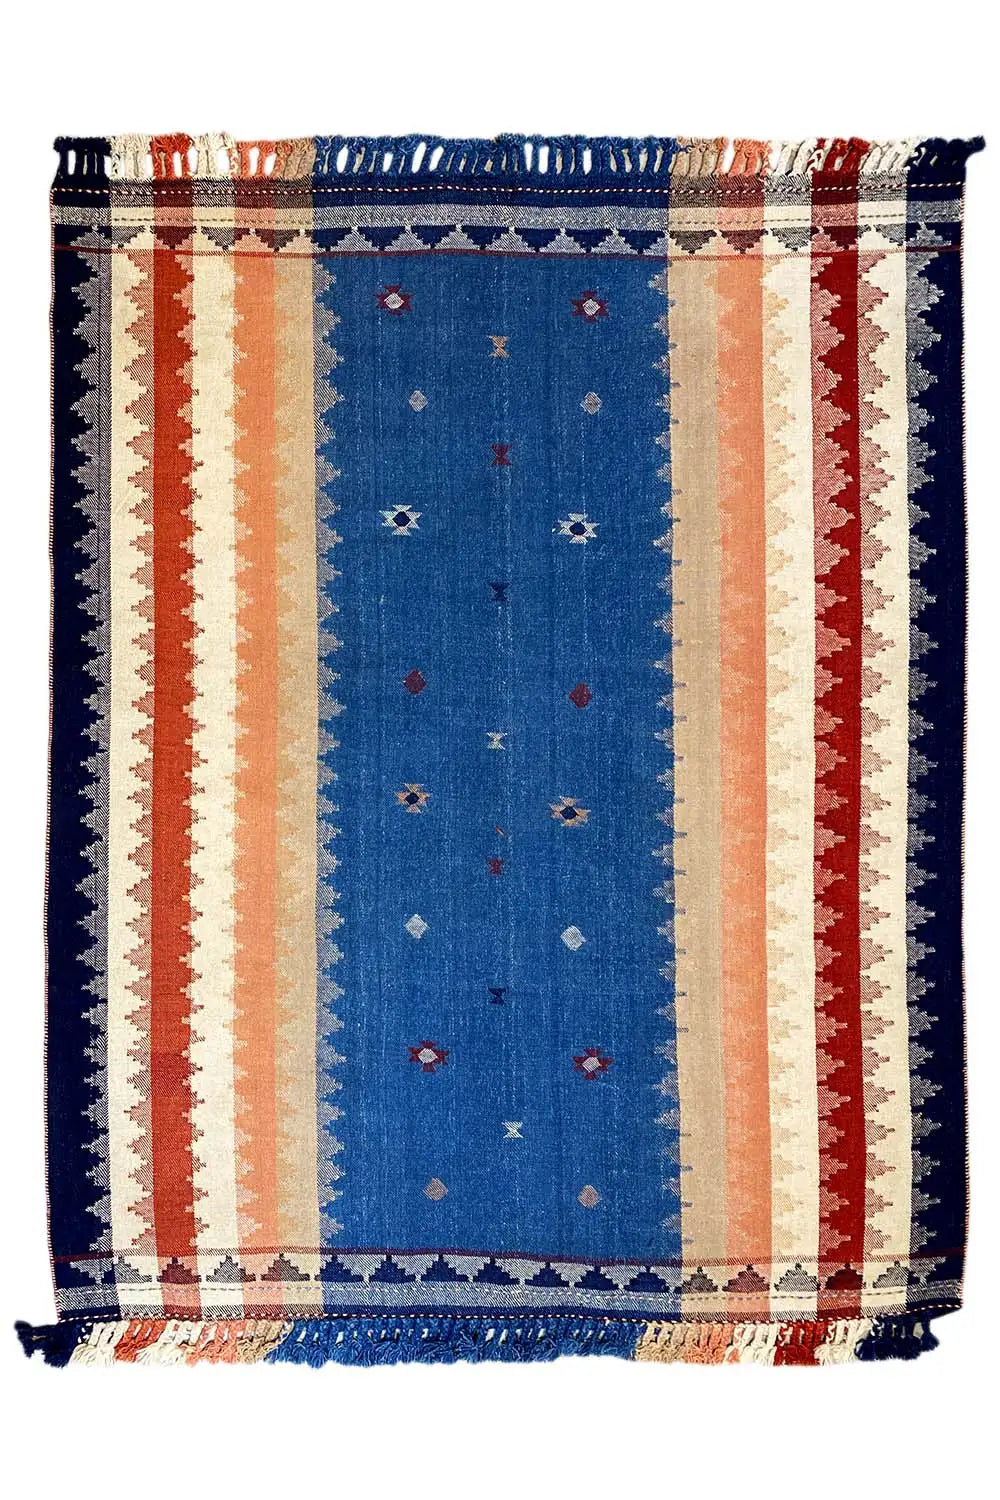 Jajim Exclusive Teppiche (217x176cm) - German Carpet Shop